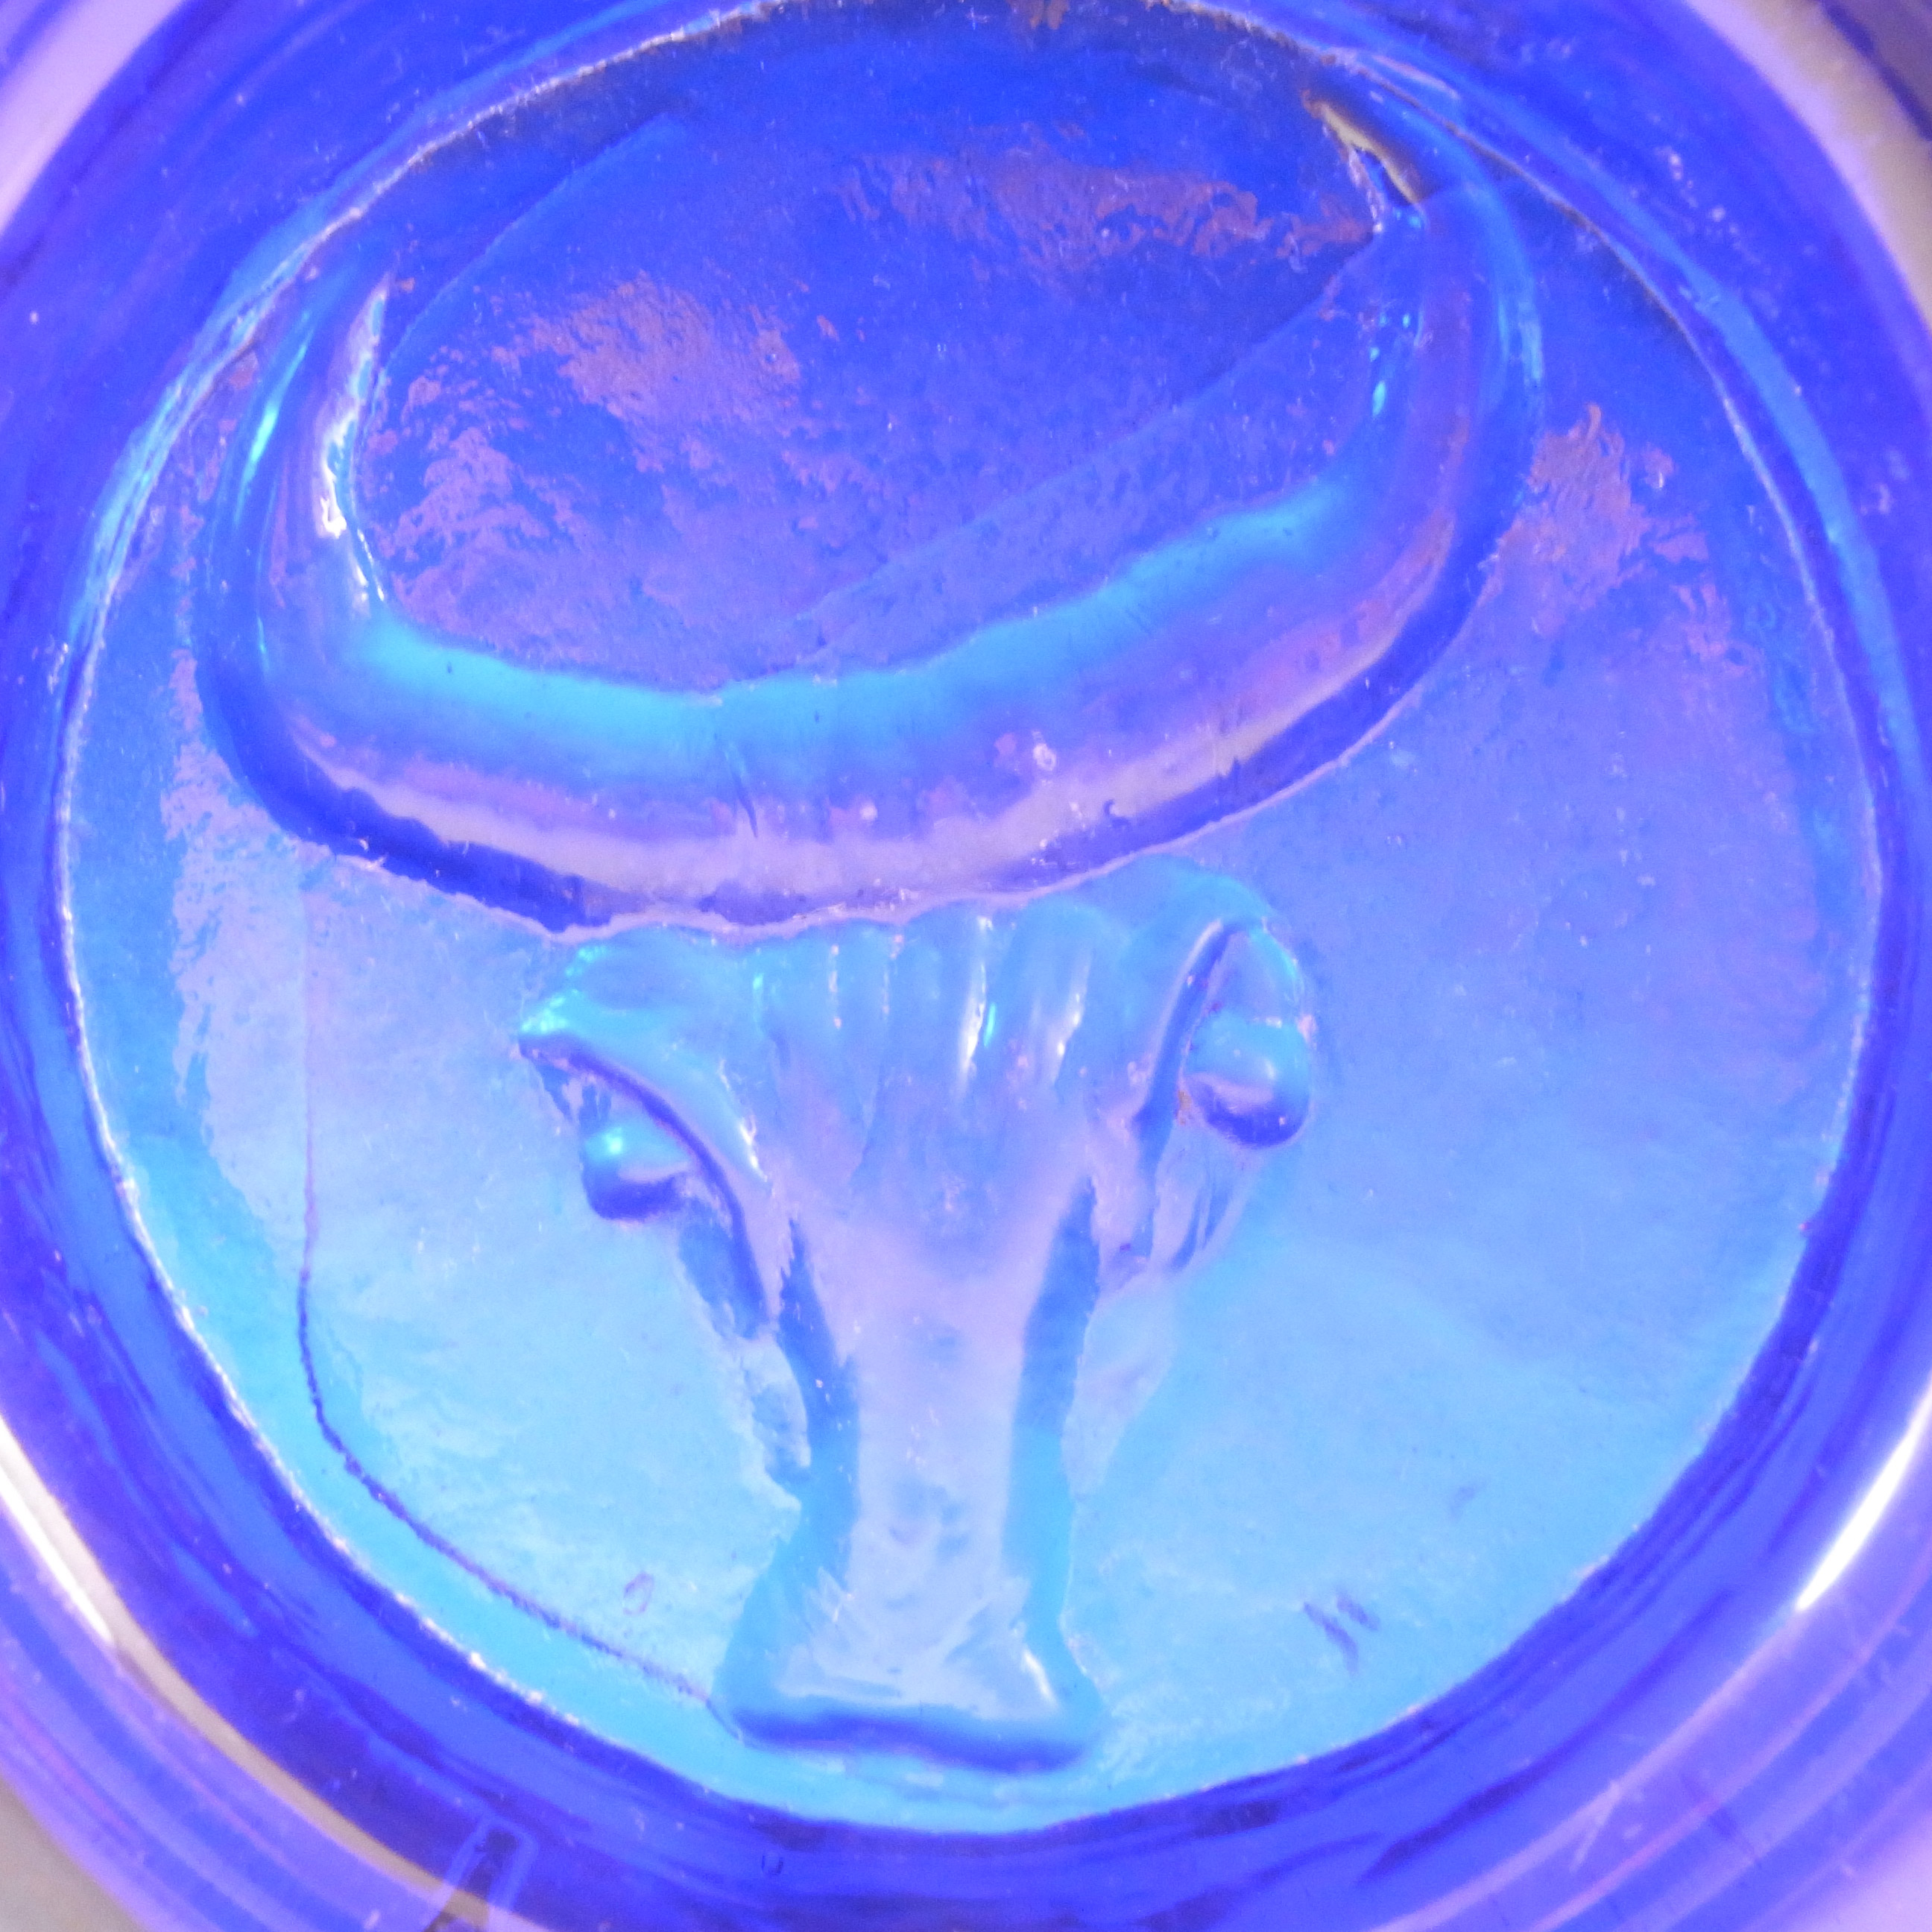 Kosta Boda Swedish Blue Glass Bull Bowl by Erik Hoglund - Click Image to Close